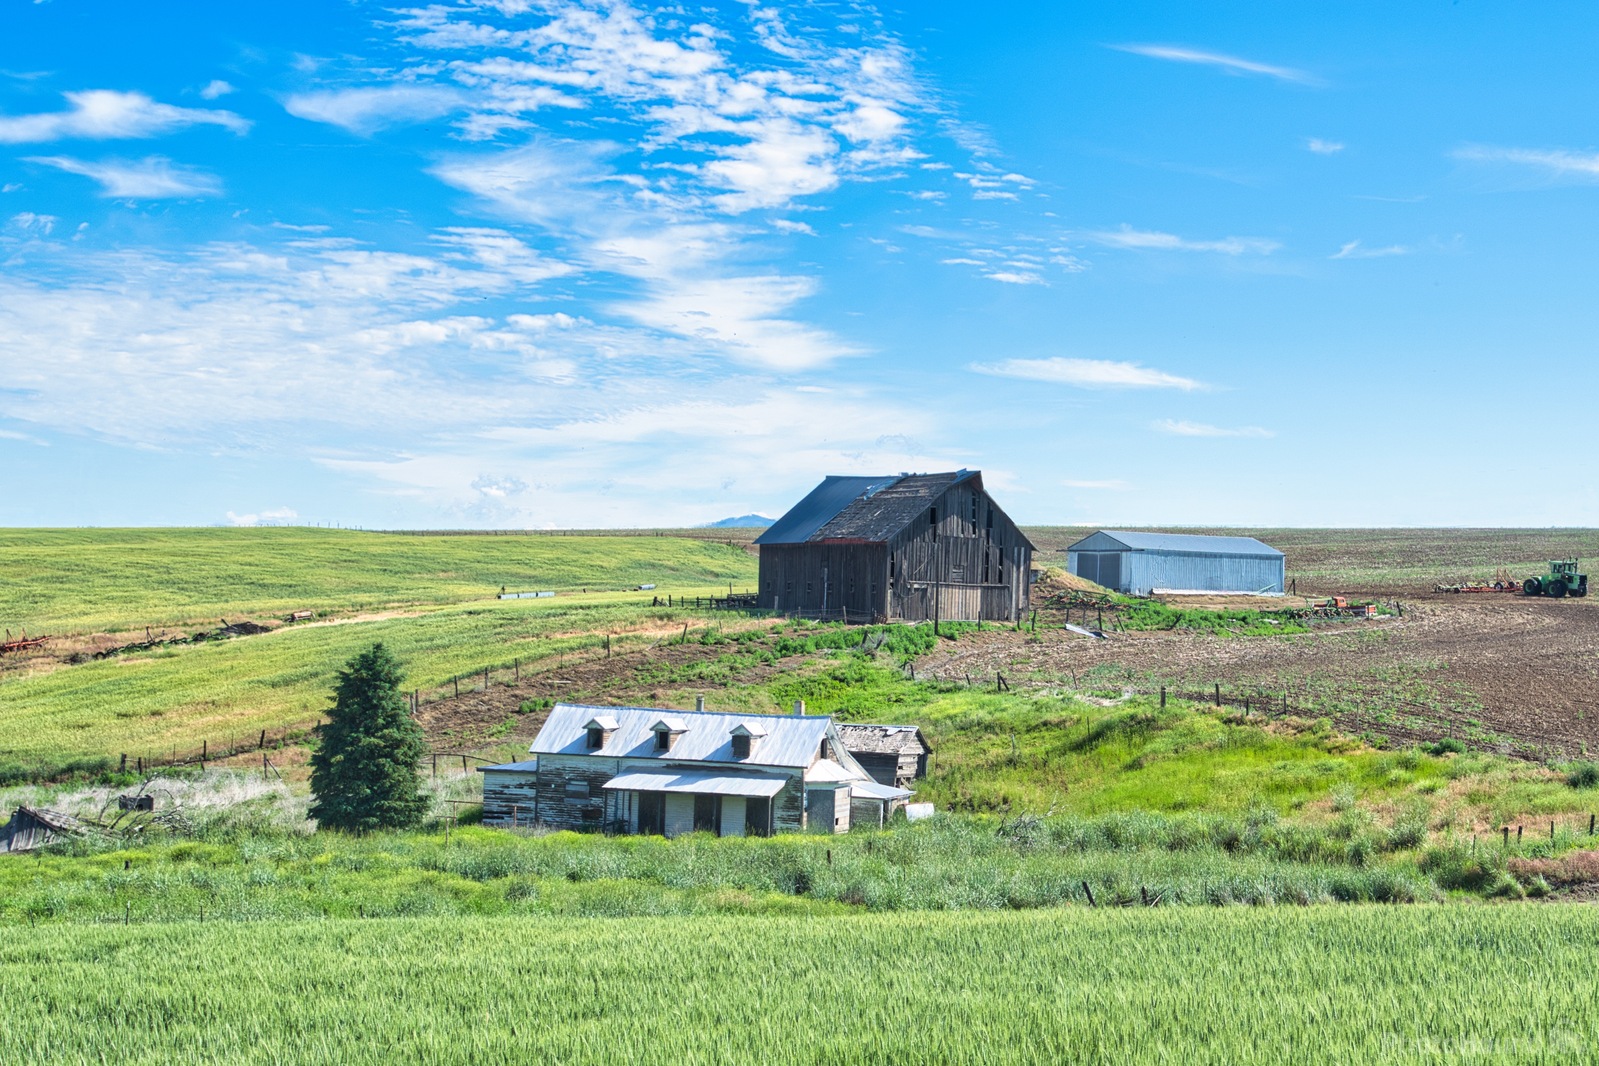 Image of The Family Farm Almira, Washington by Steve West